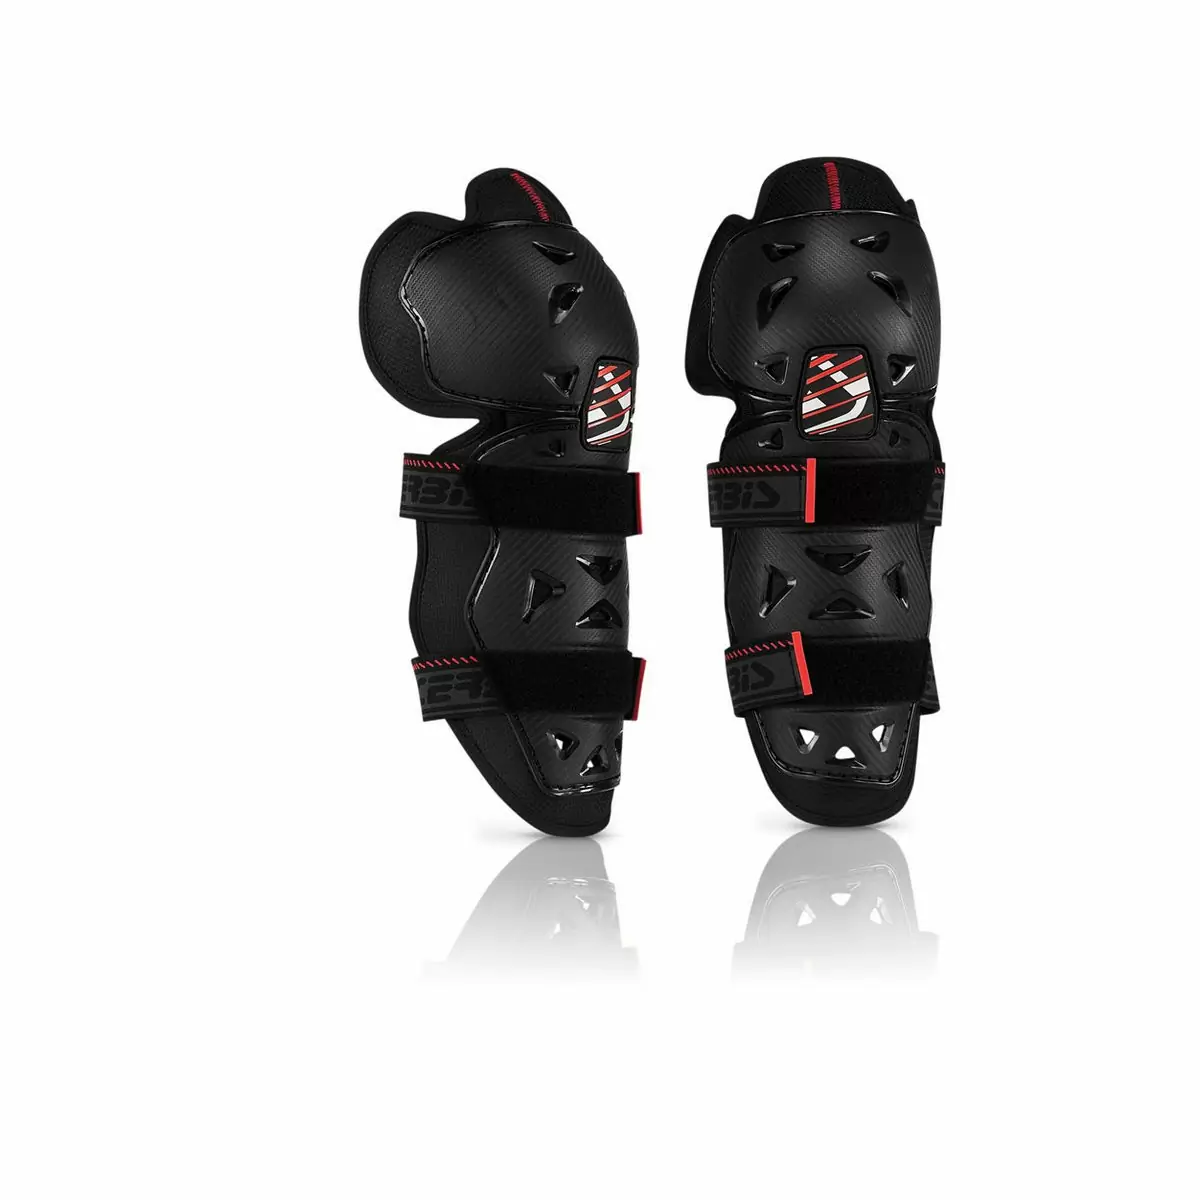 knee guards profile 2.0 black one size moto - image